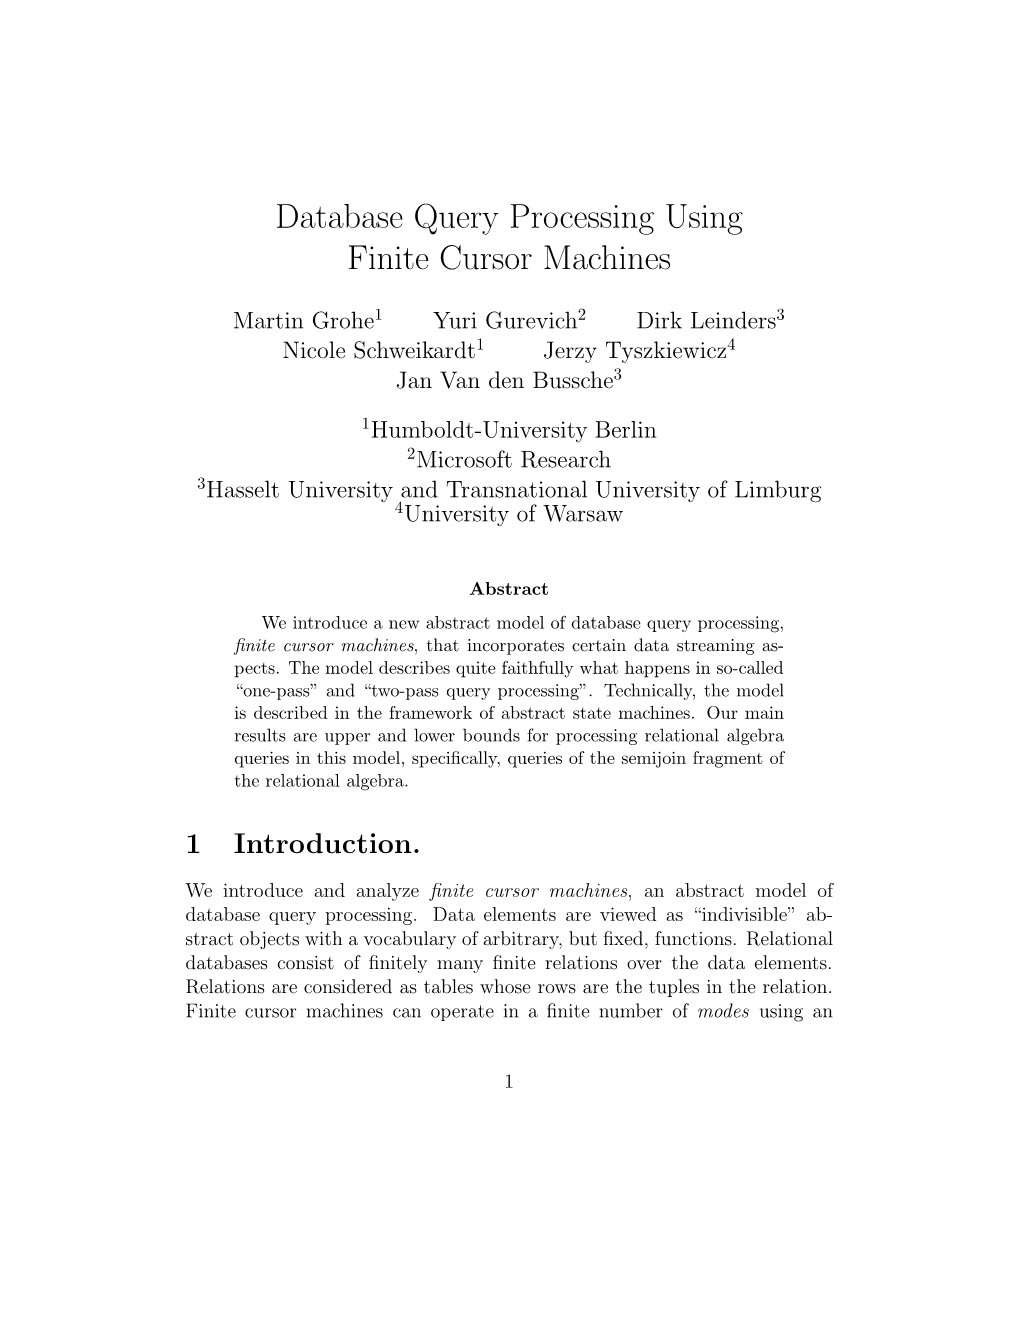 Database Query Processing Using Finite Cursor Machines